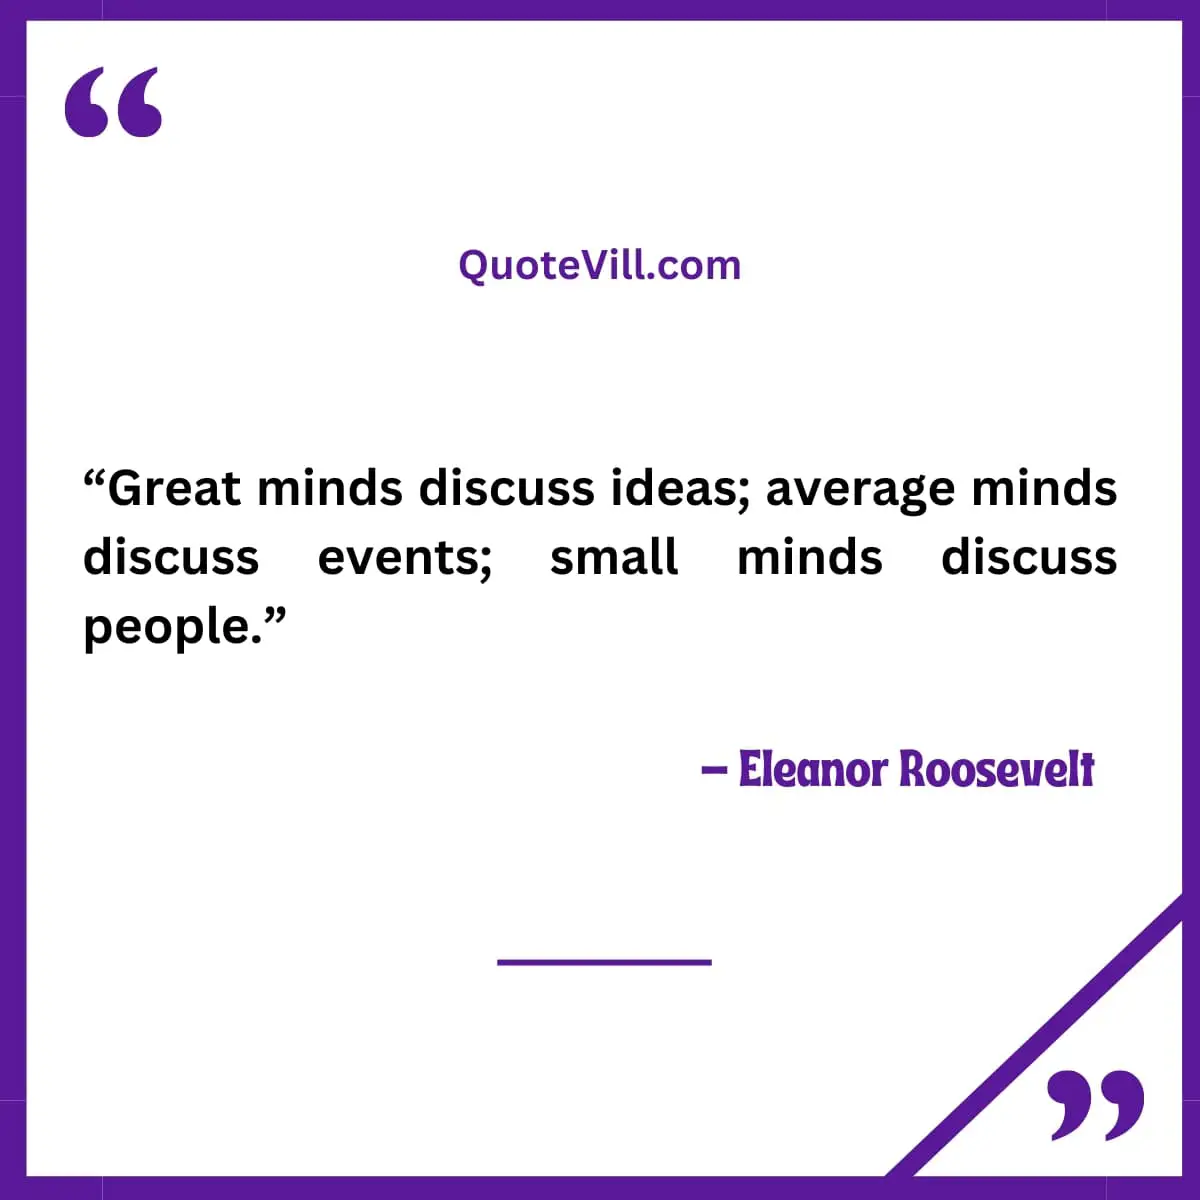 Eleanor Roosevelt Quotes On Leadership